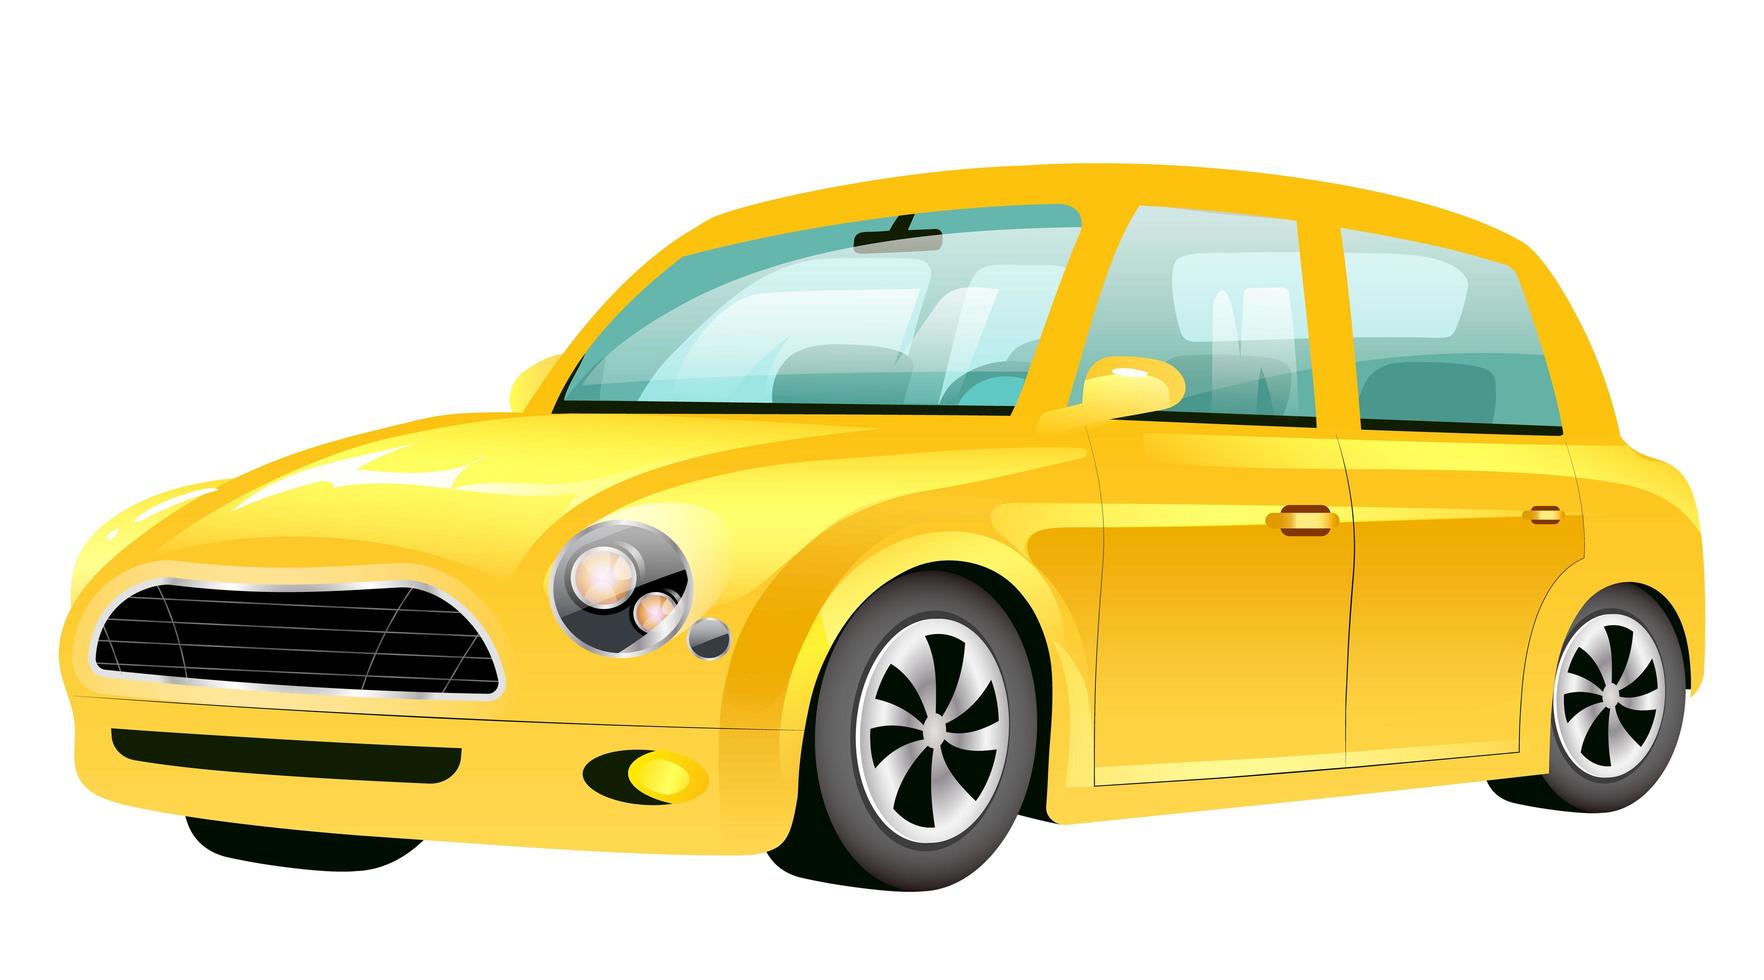 Yellow mini car cartoon vector illustration